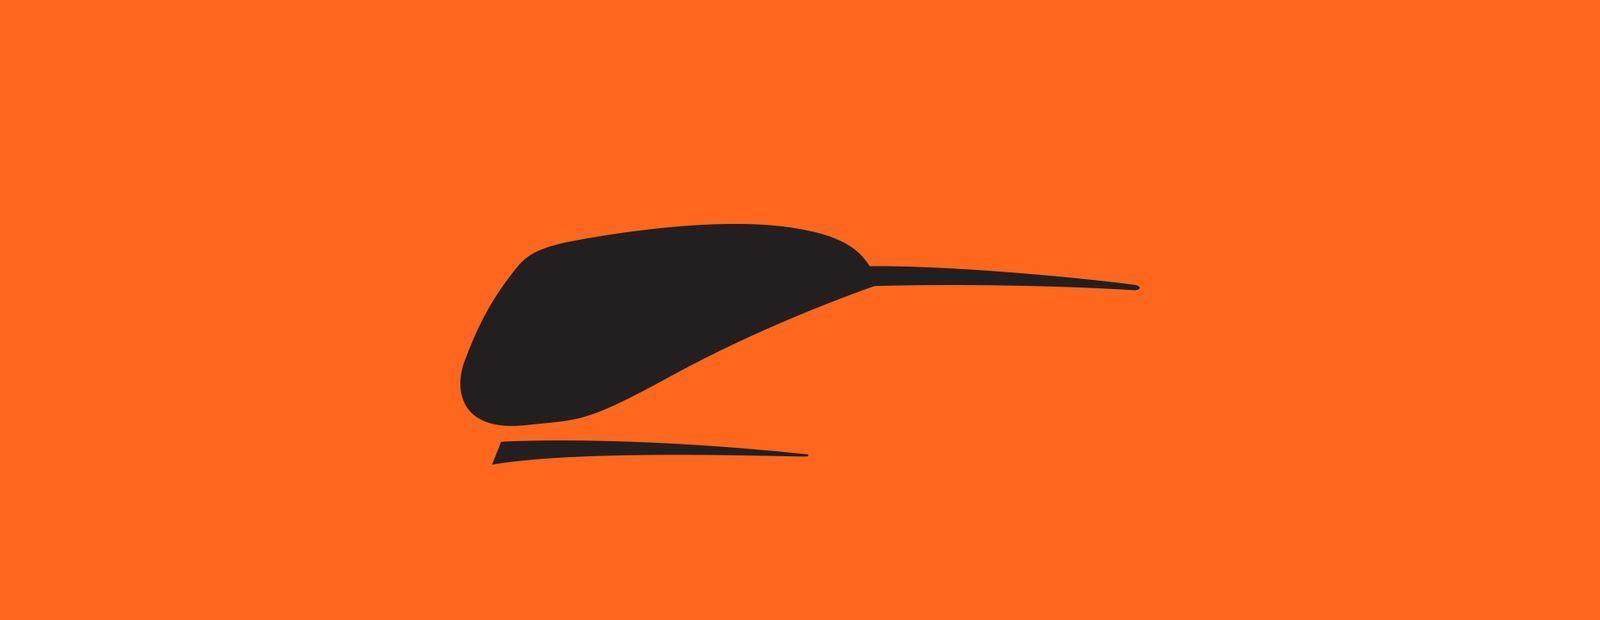 Orange Kiwi Bird Logo - McLaren Formula 1 by numbers. And a flightless bird